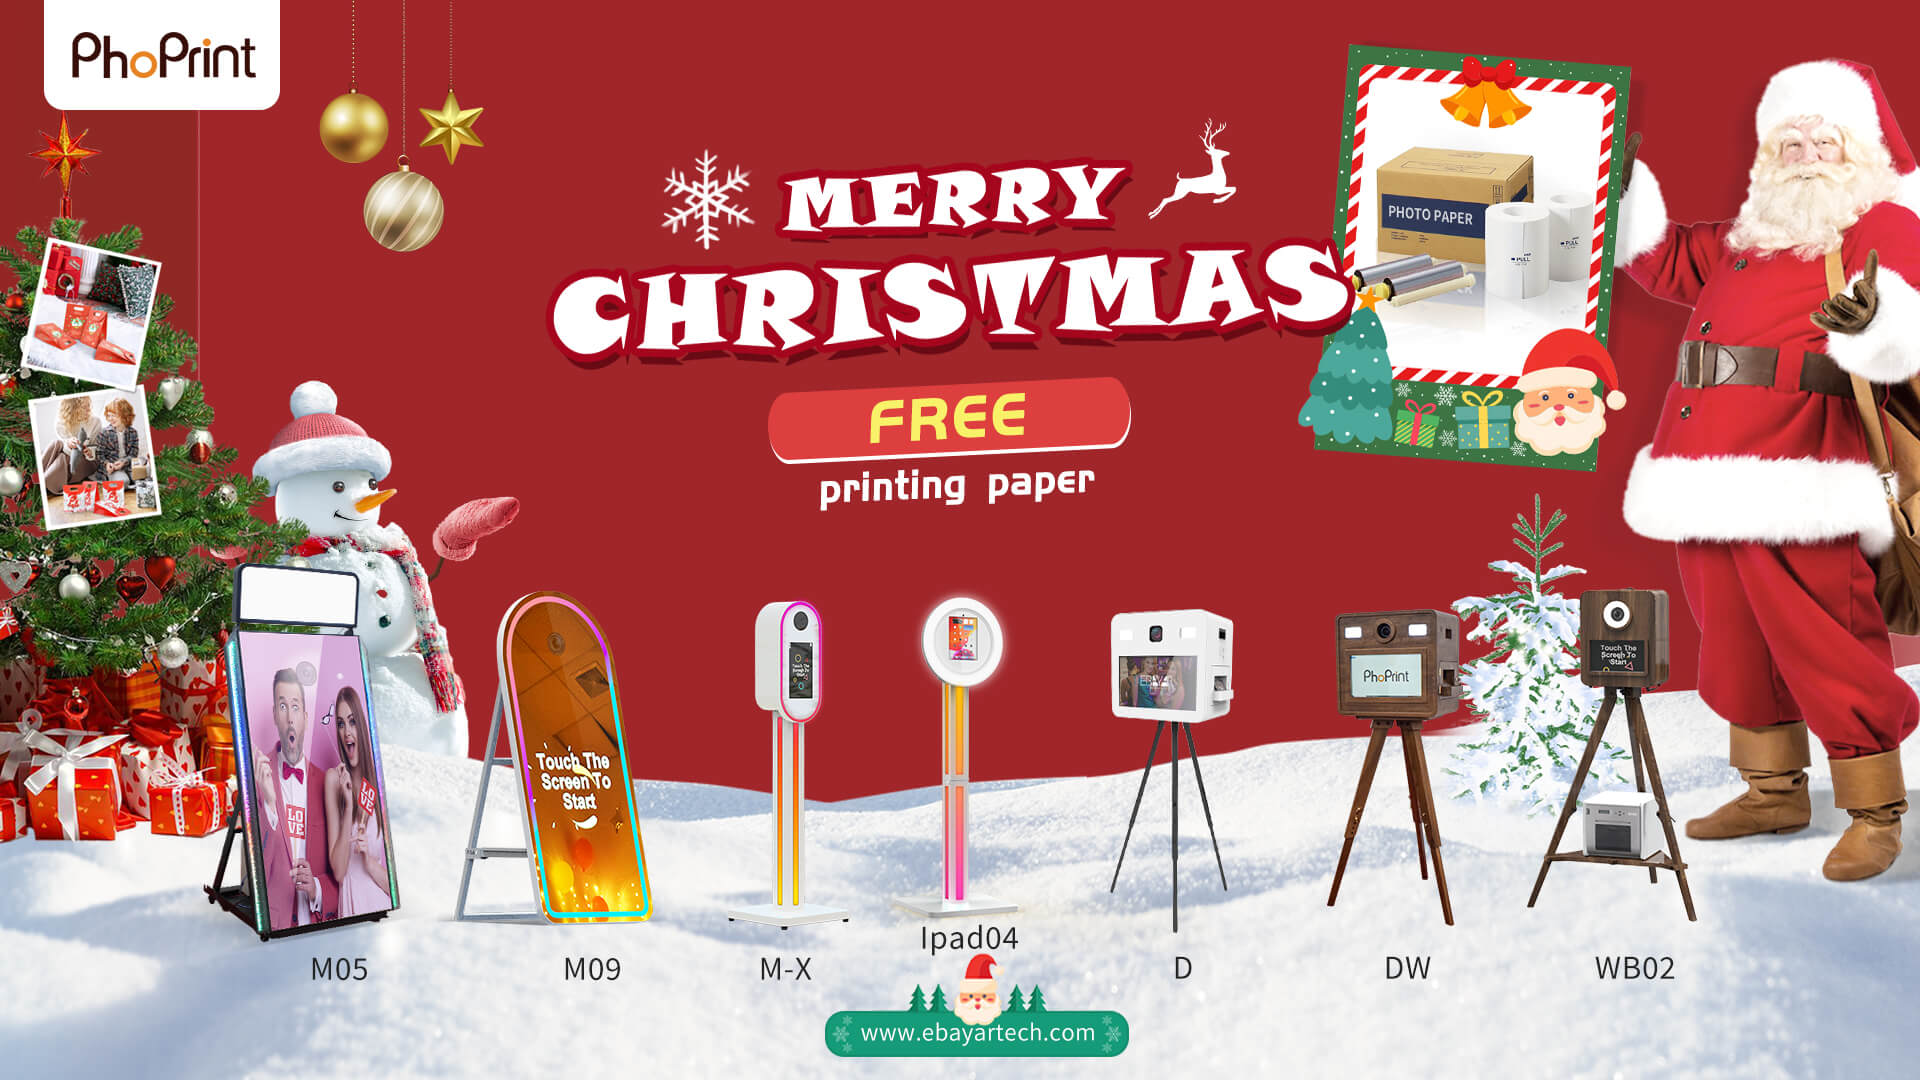 phoprint Christmas offers